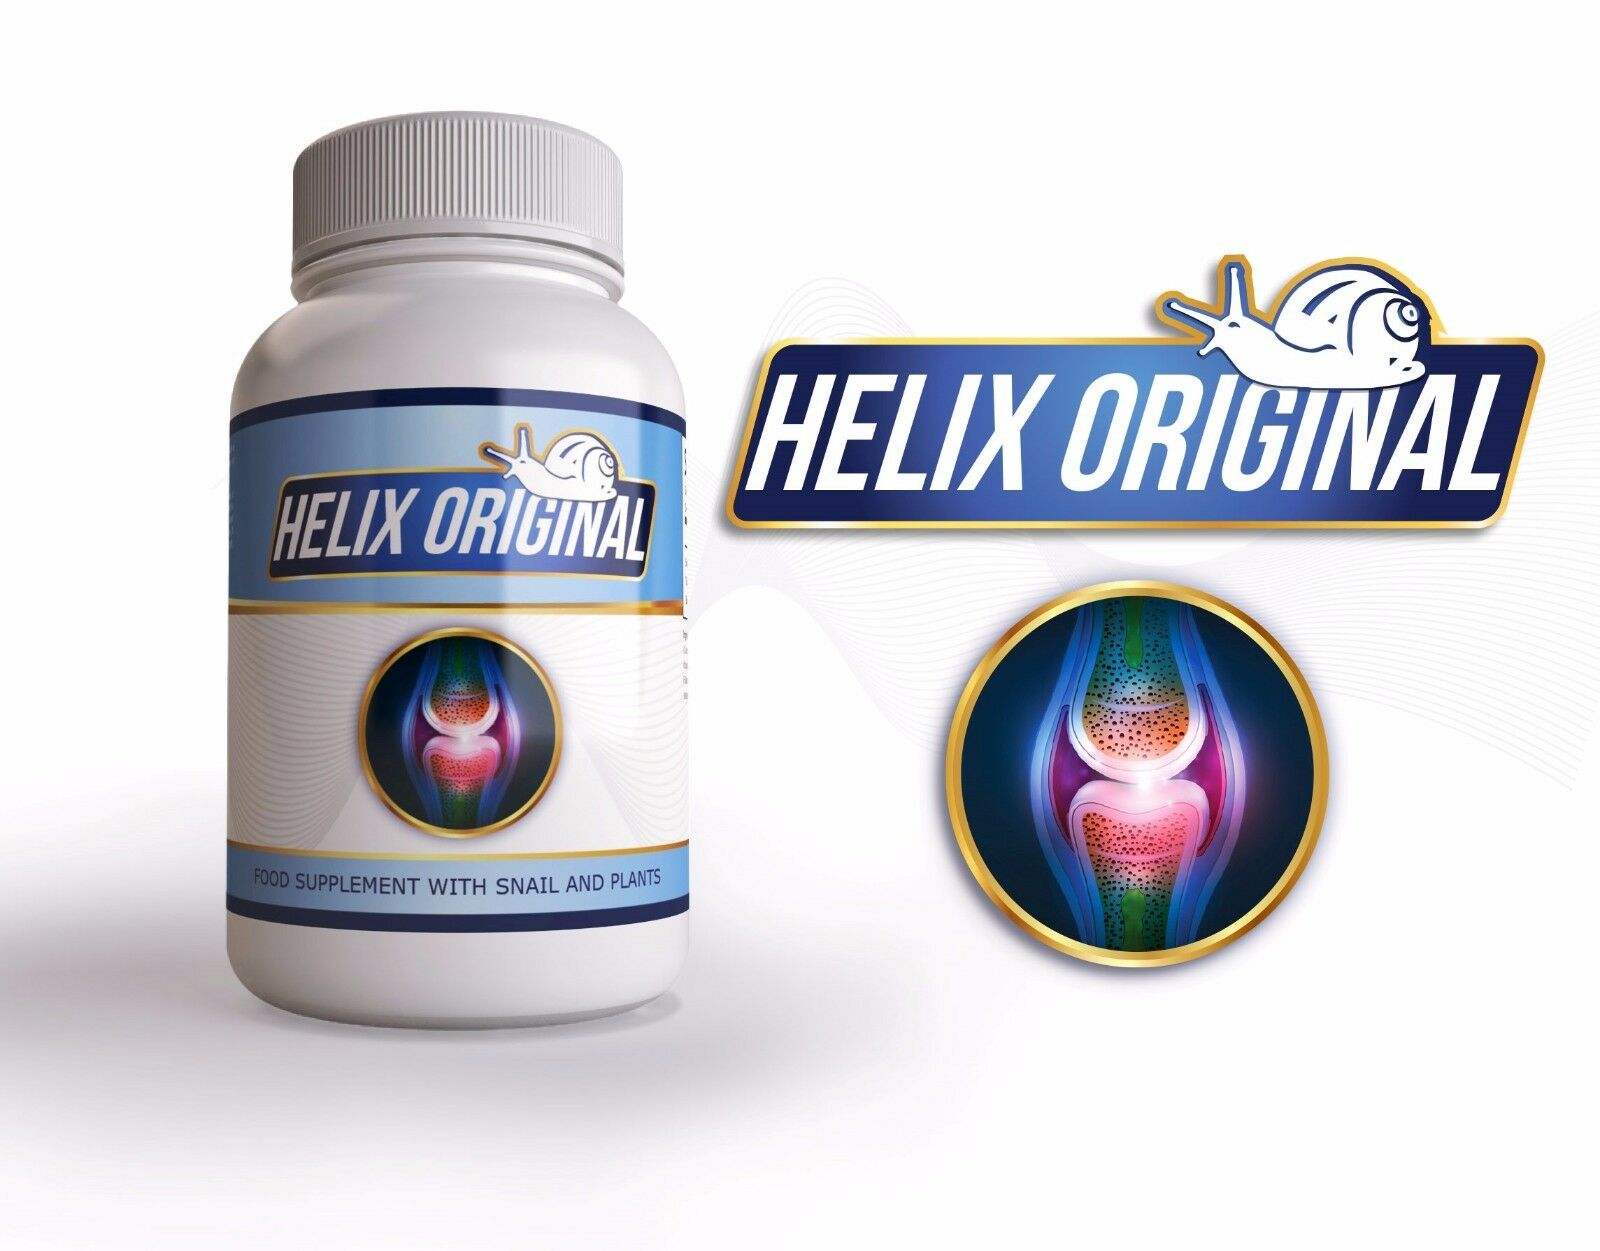 Helix Original 100% Natural Advanced Joint Support Supplement Formula Snail